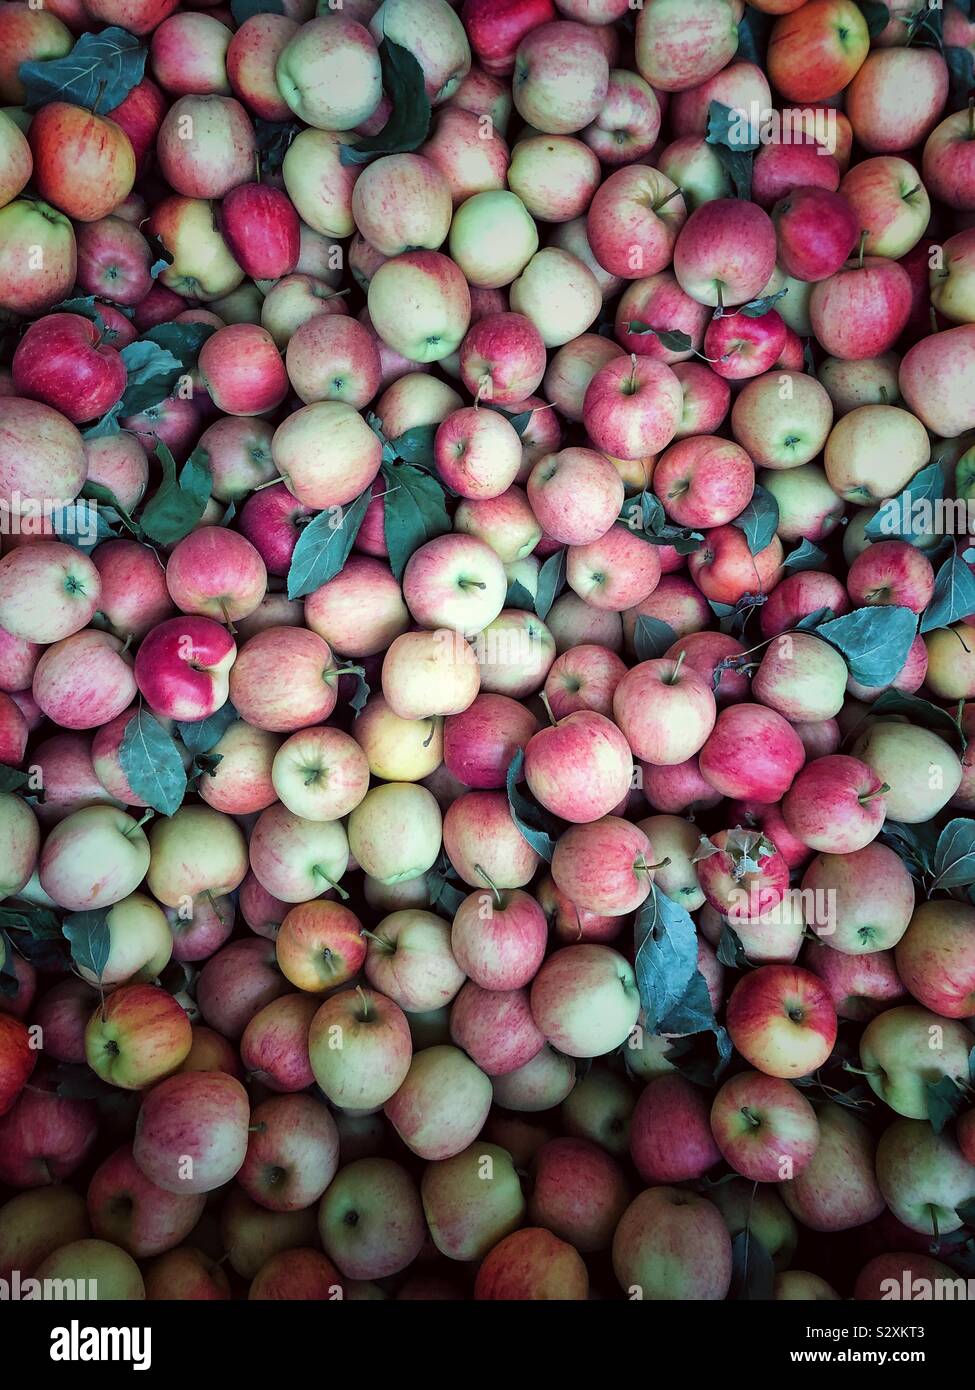 Plentiful harvest of famous Washington state Gala apples Stock Photo